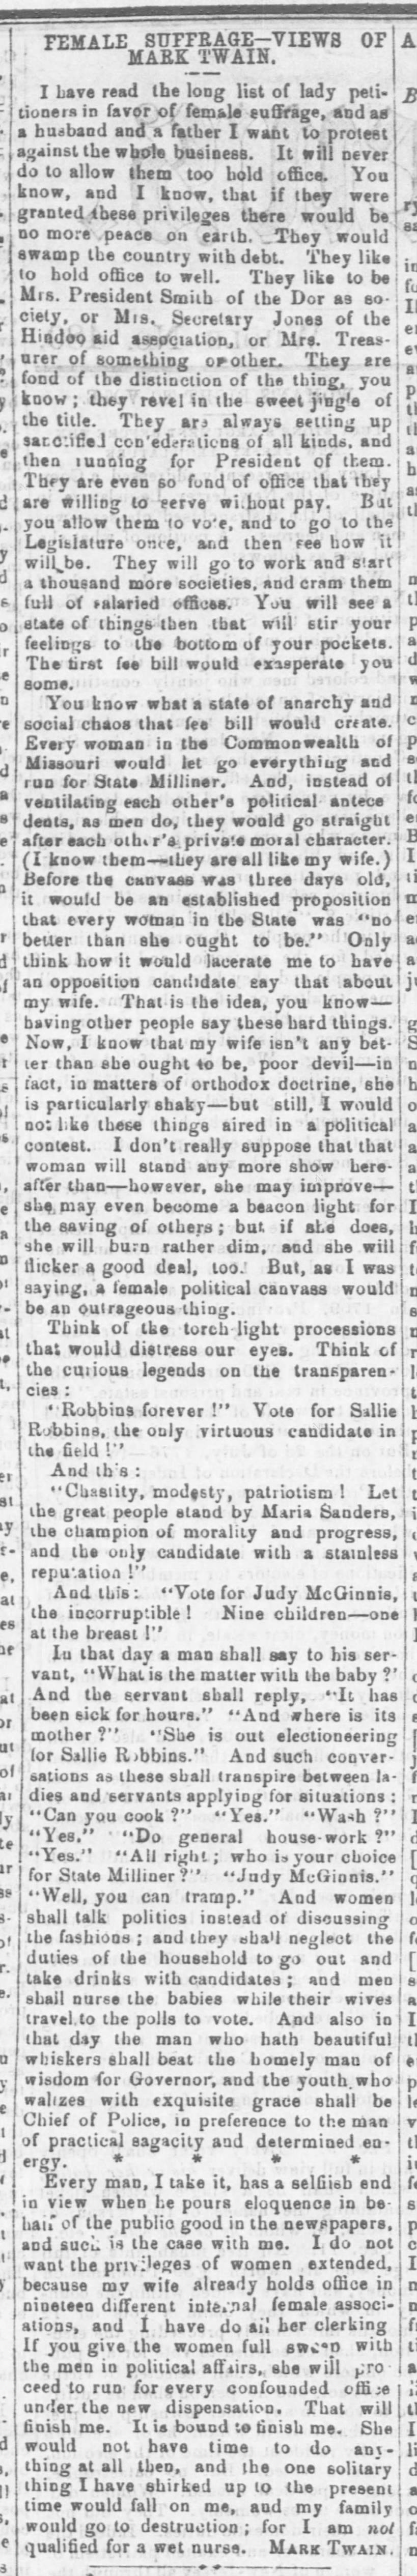 Mark Twain satire against woman's suffrage (1867)